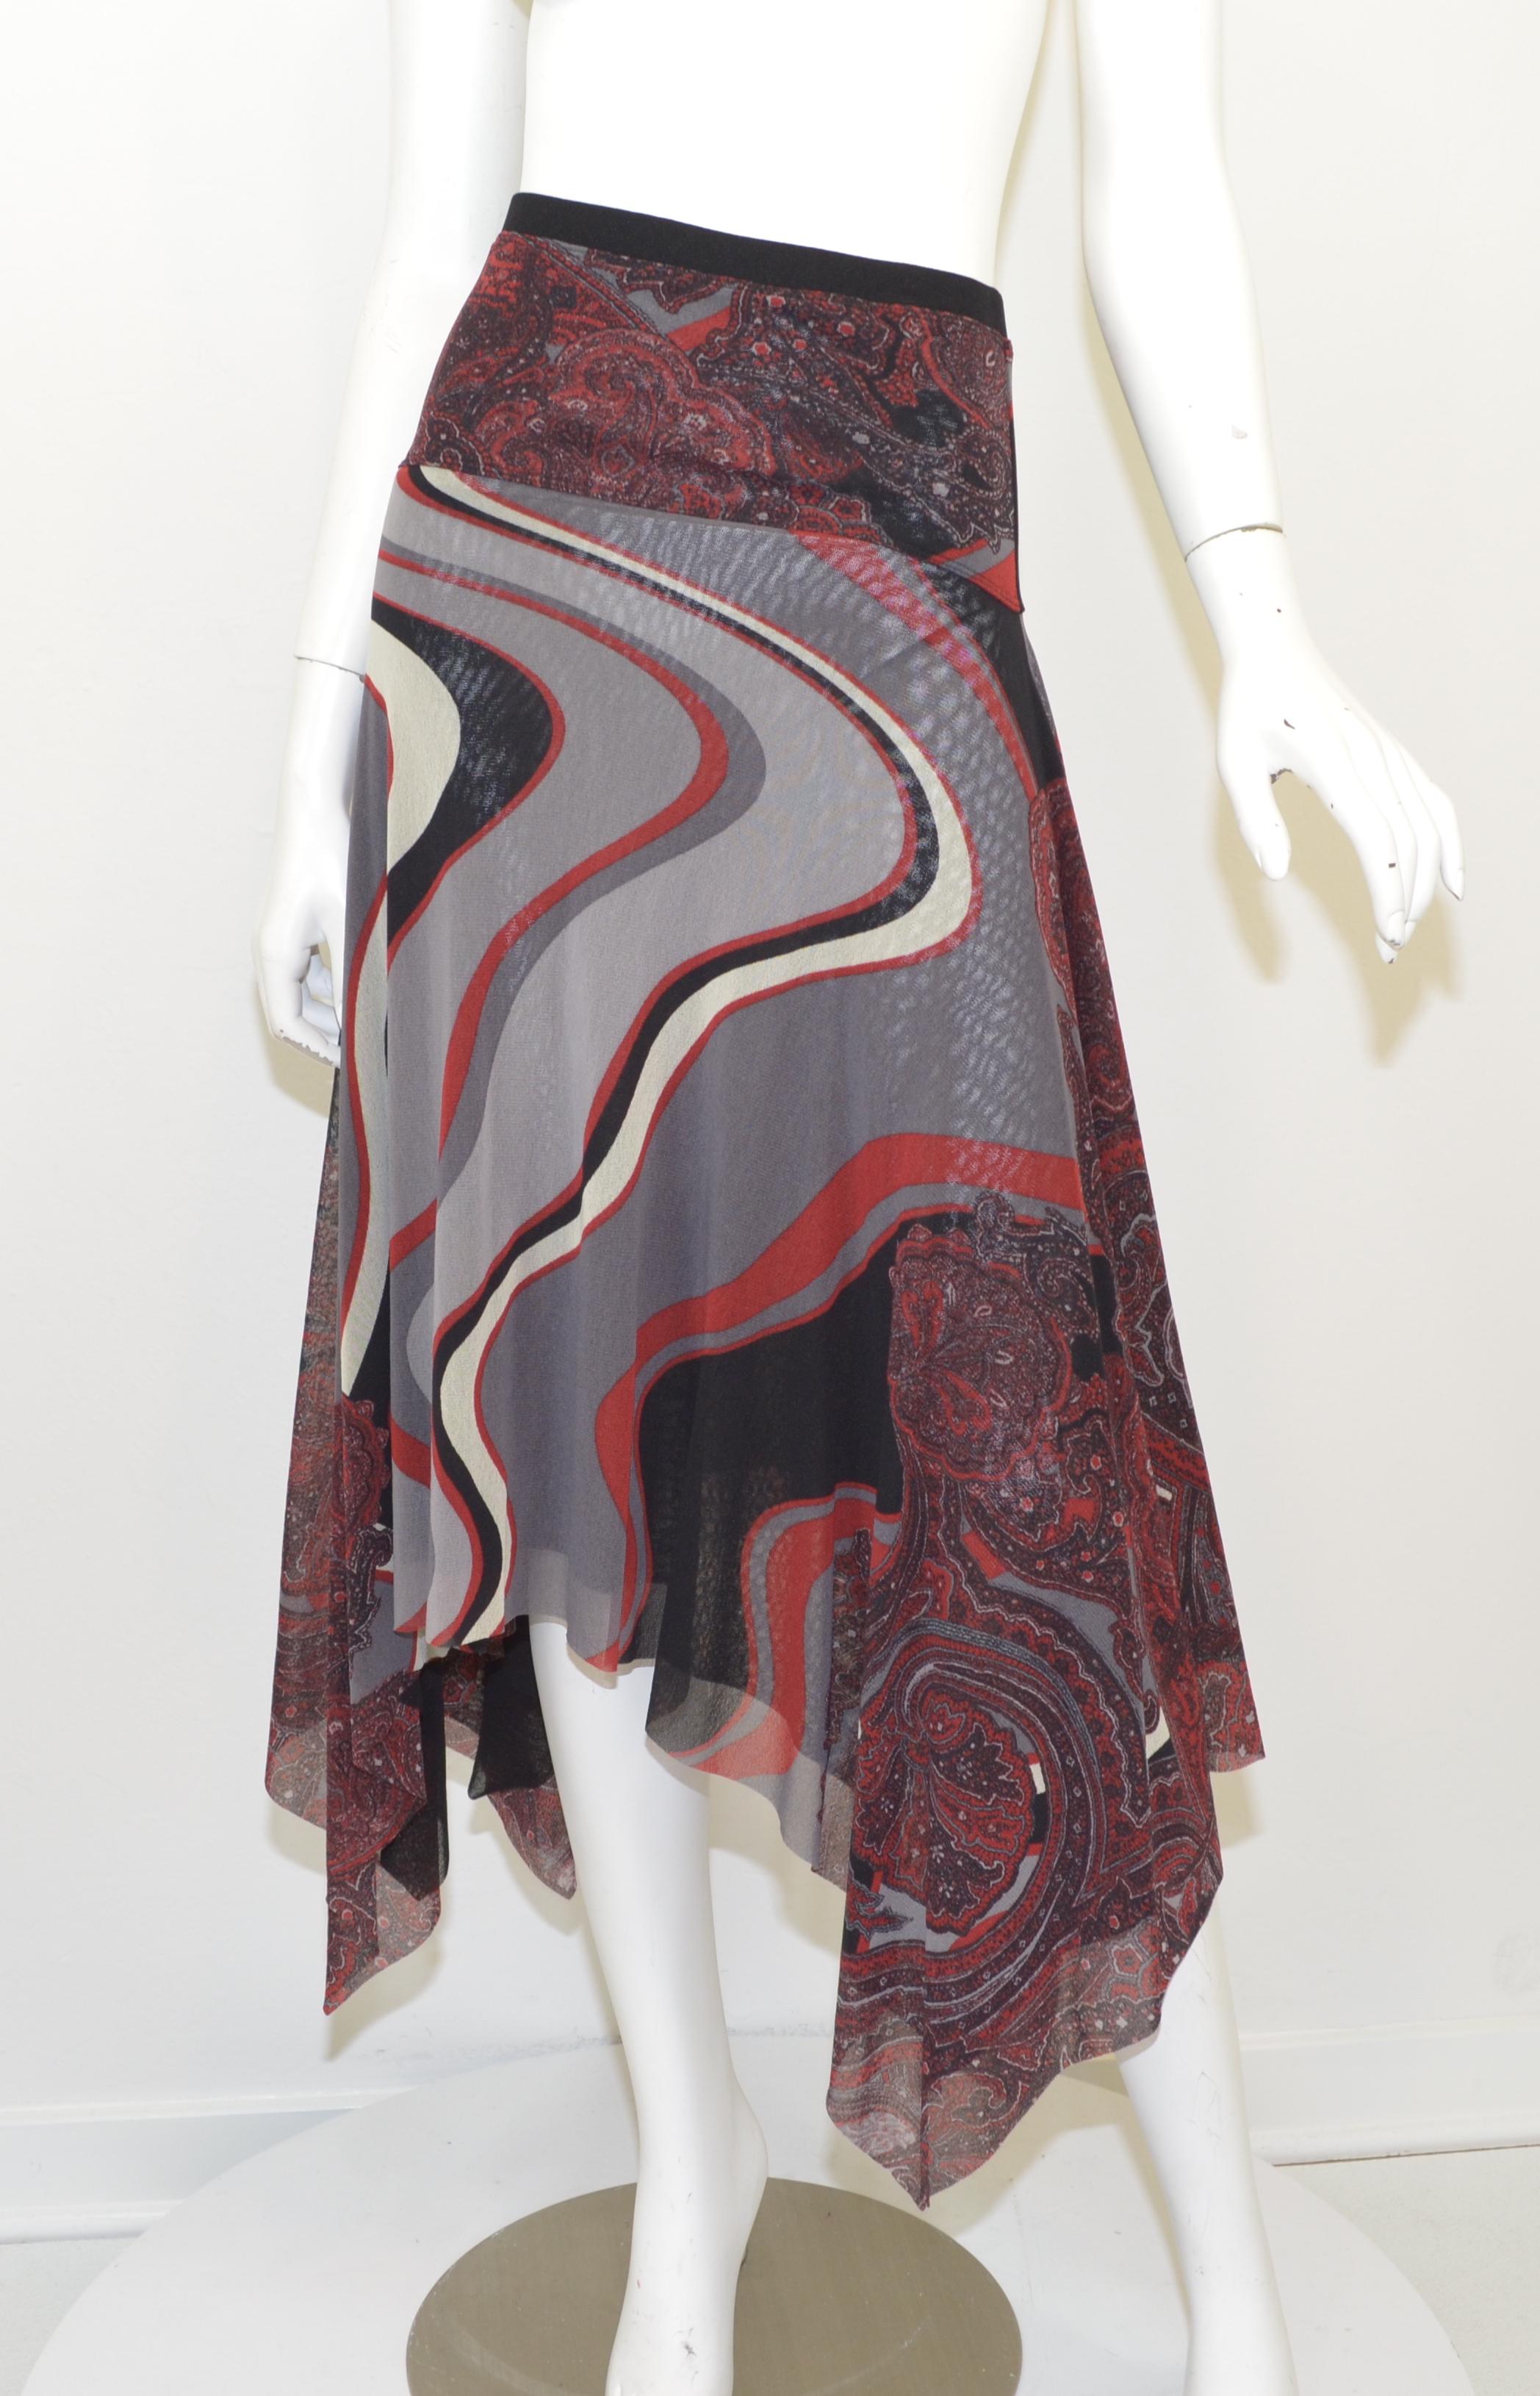 Gray Jean Paul Gaultier Mixed Print Mesh Top and Skirt Set